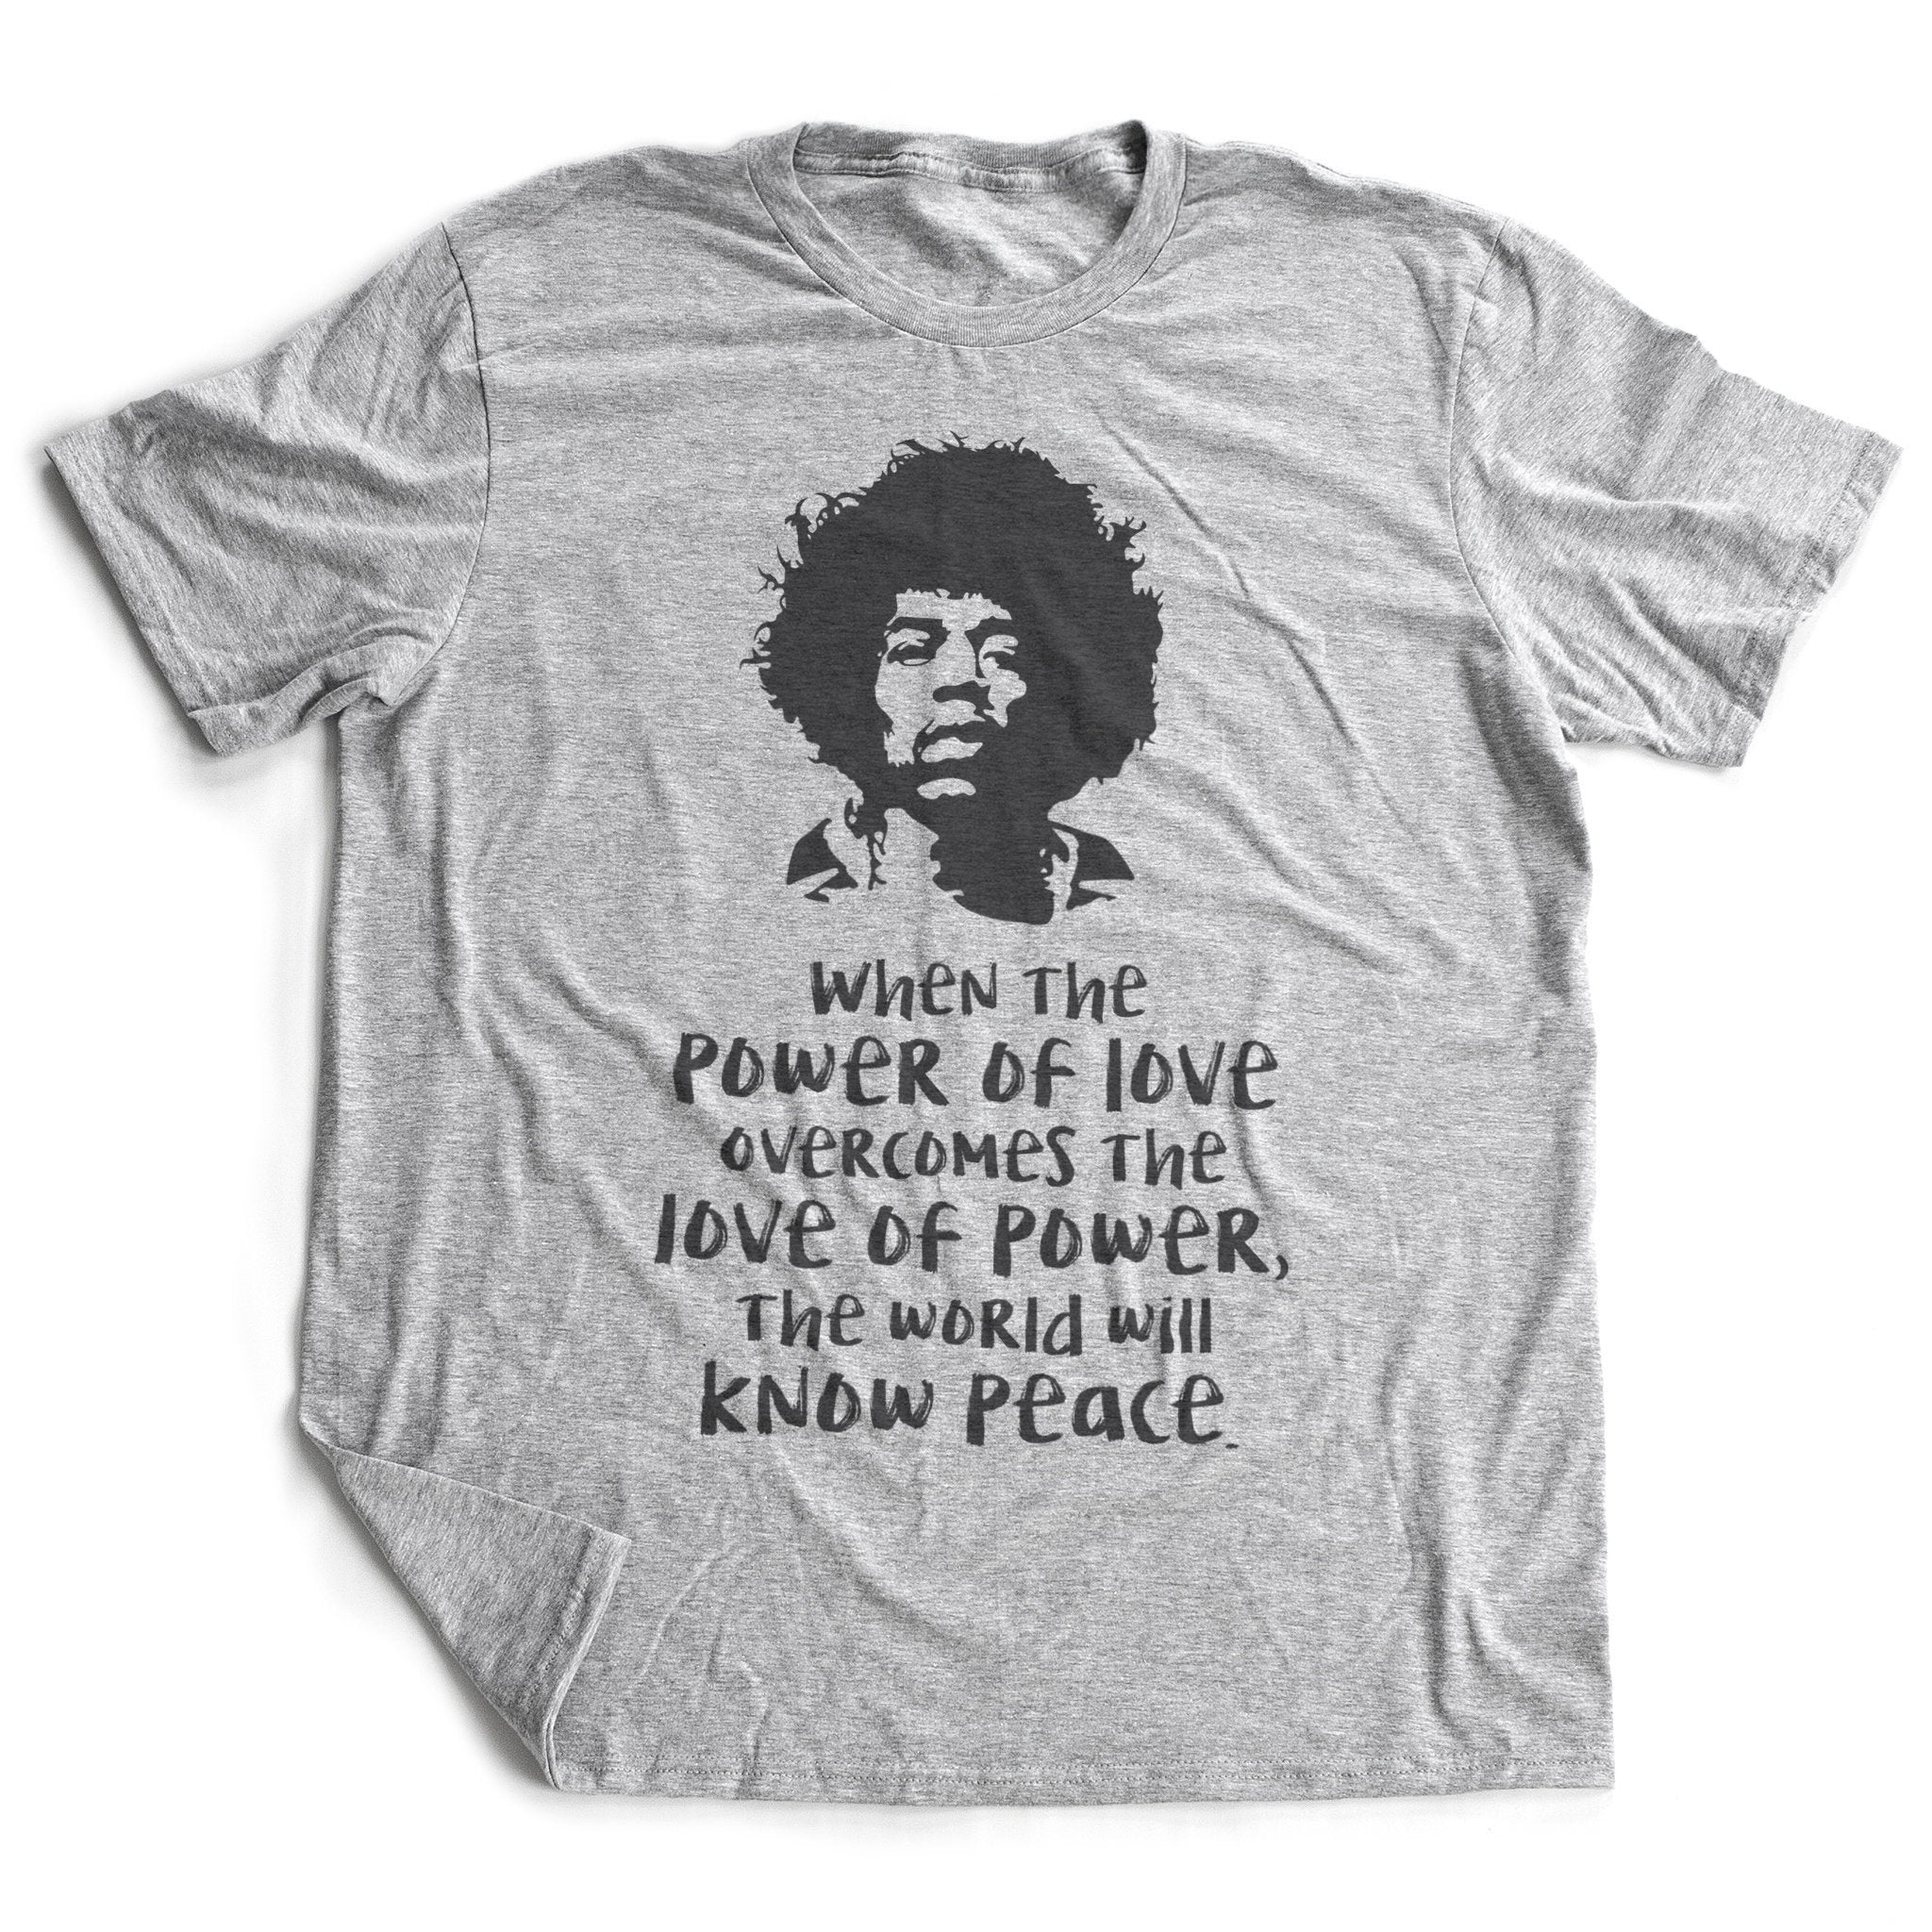 Jimi Hendrix Iconic 1970s T Shirts